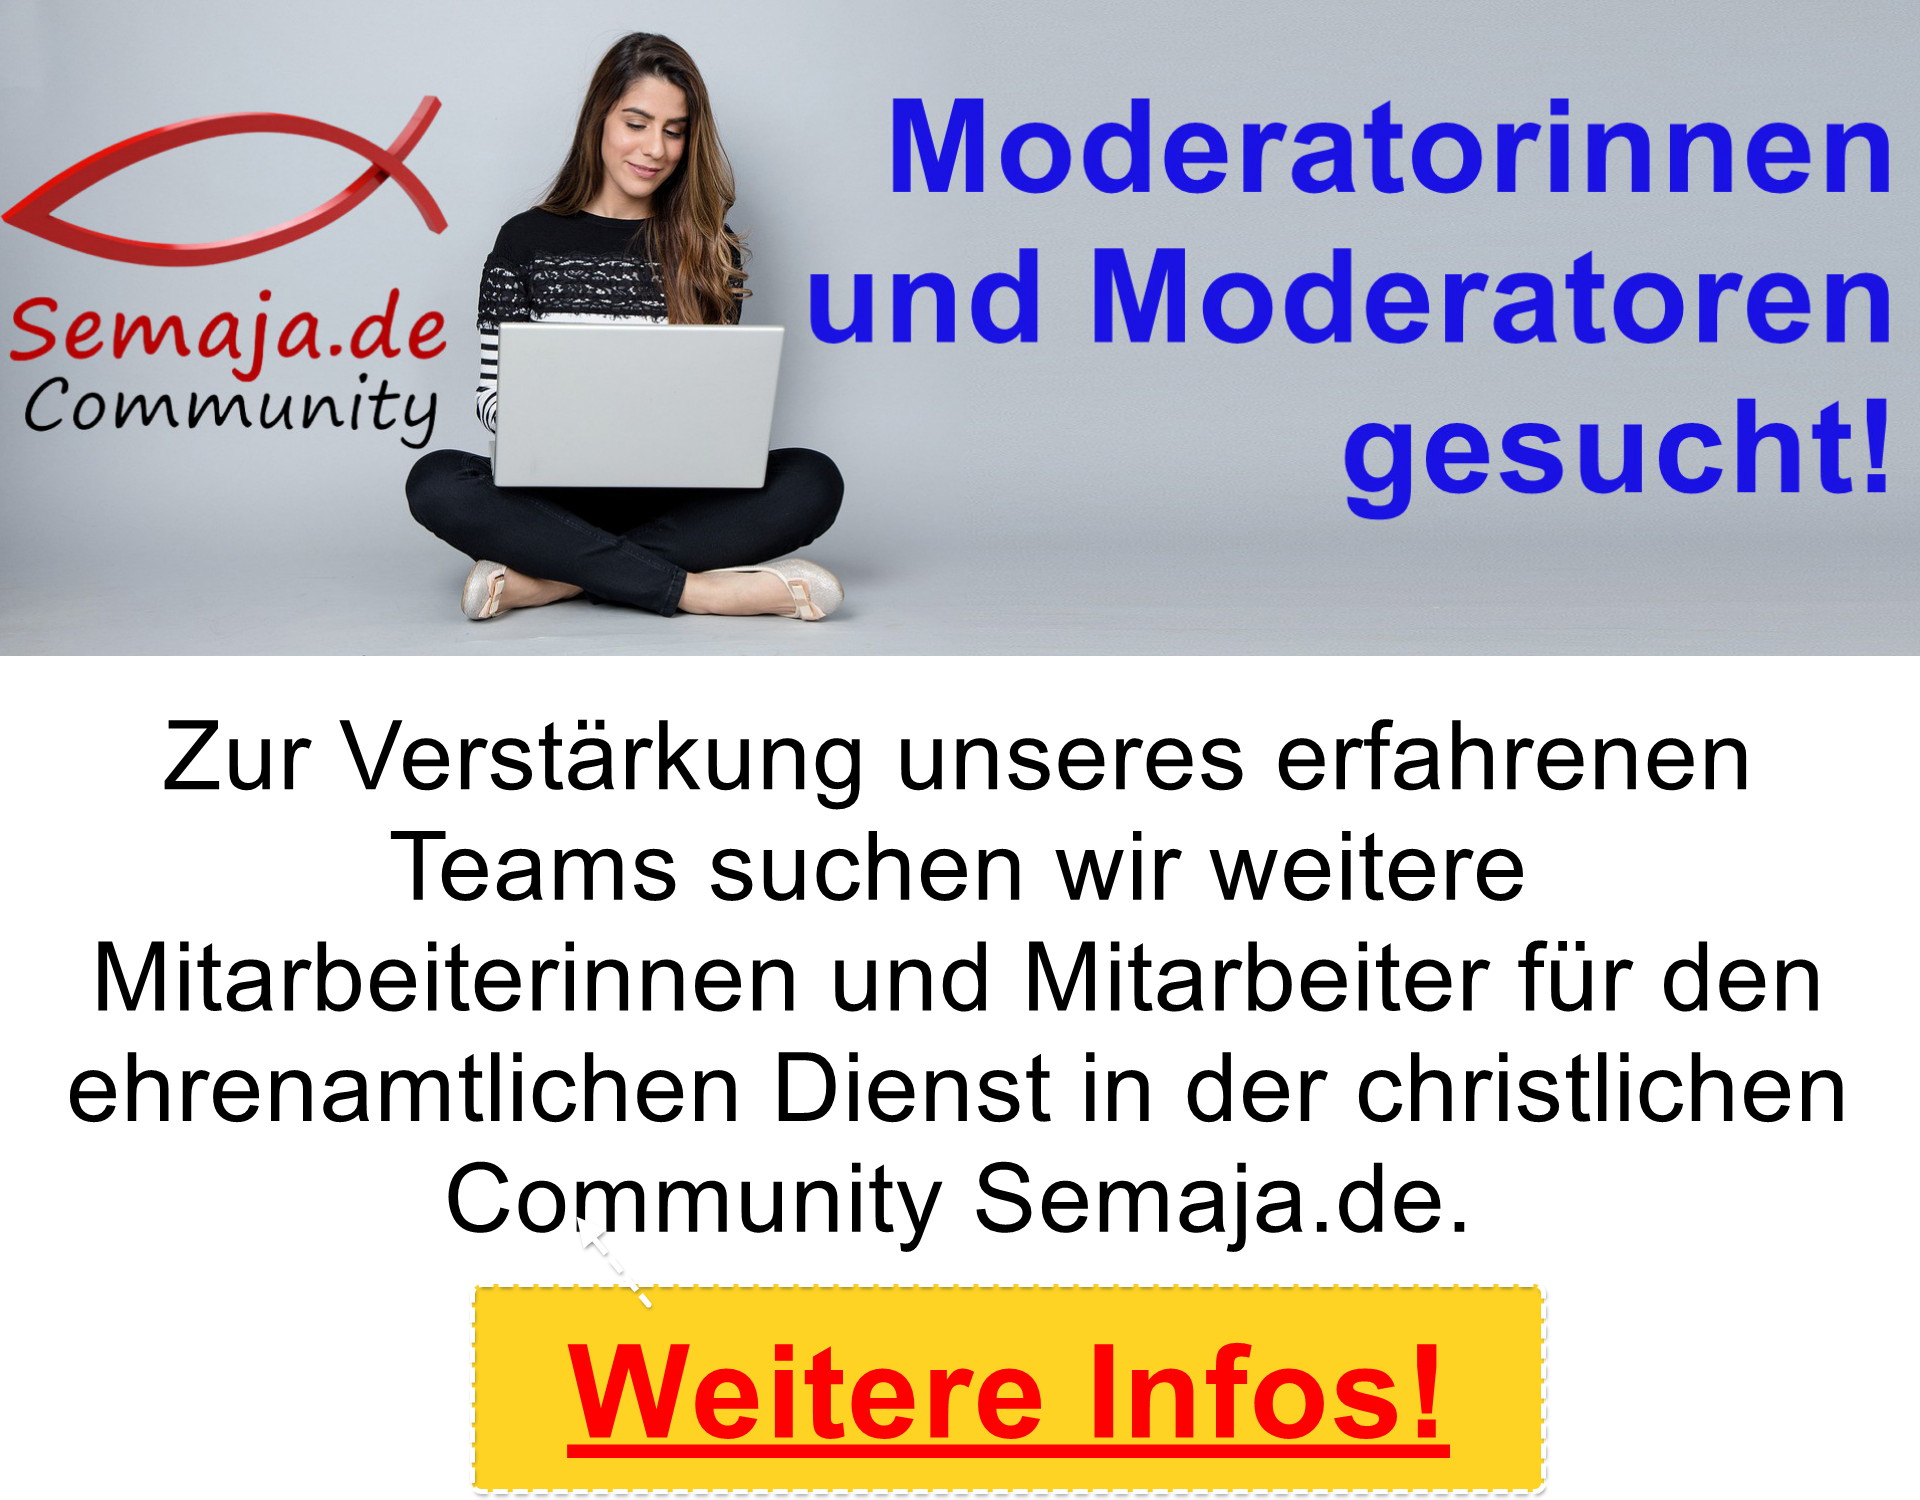 moderatoren-innen-gesucht-semaja.de